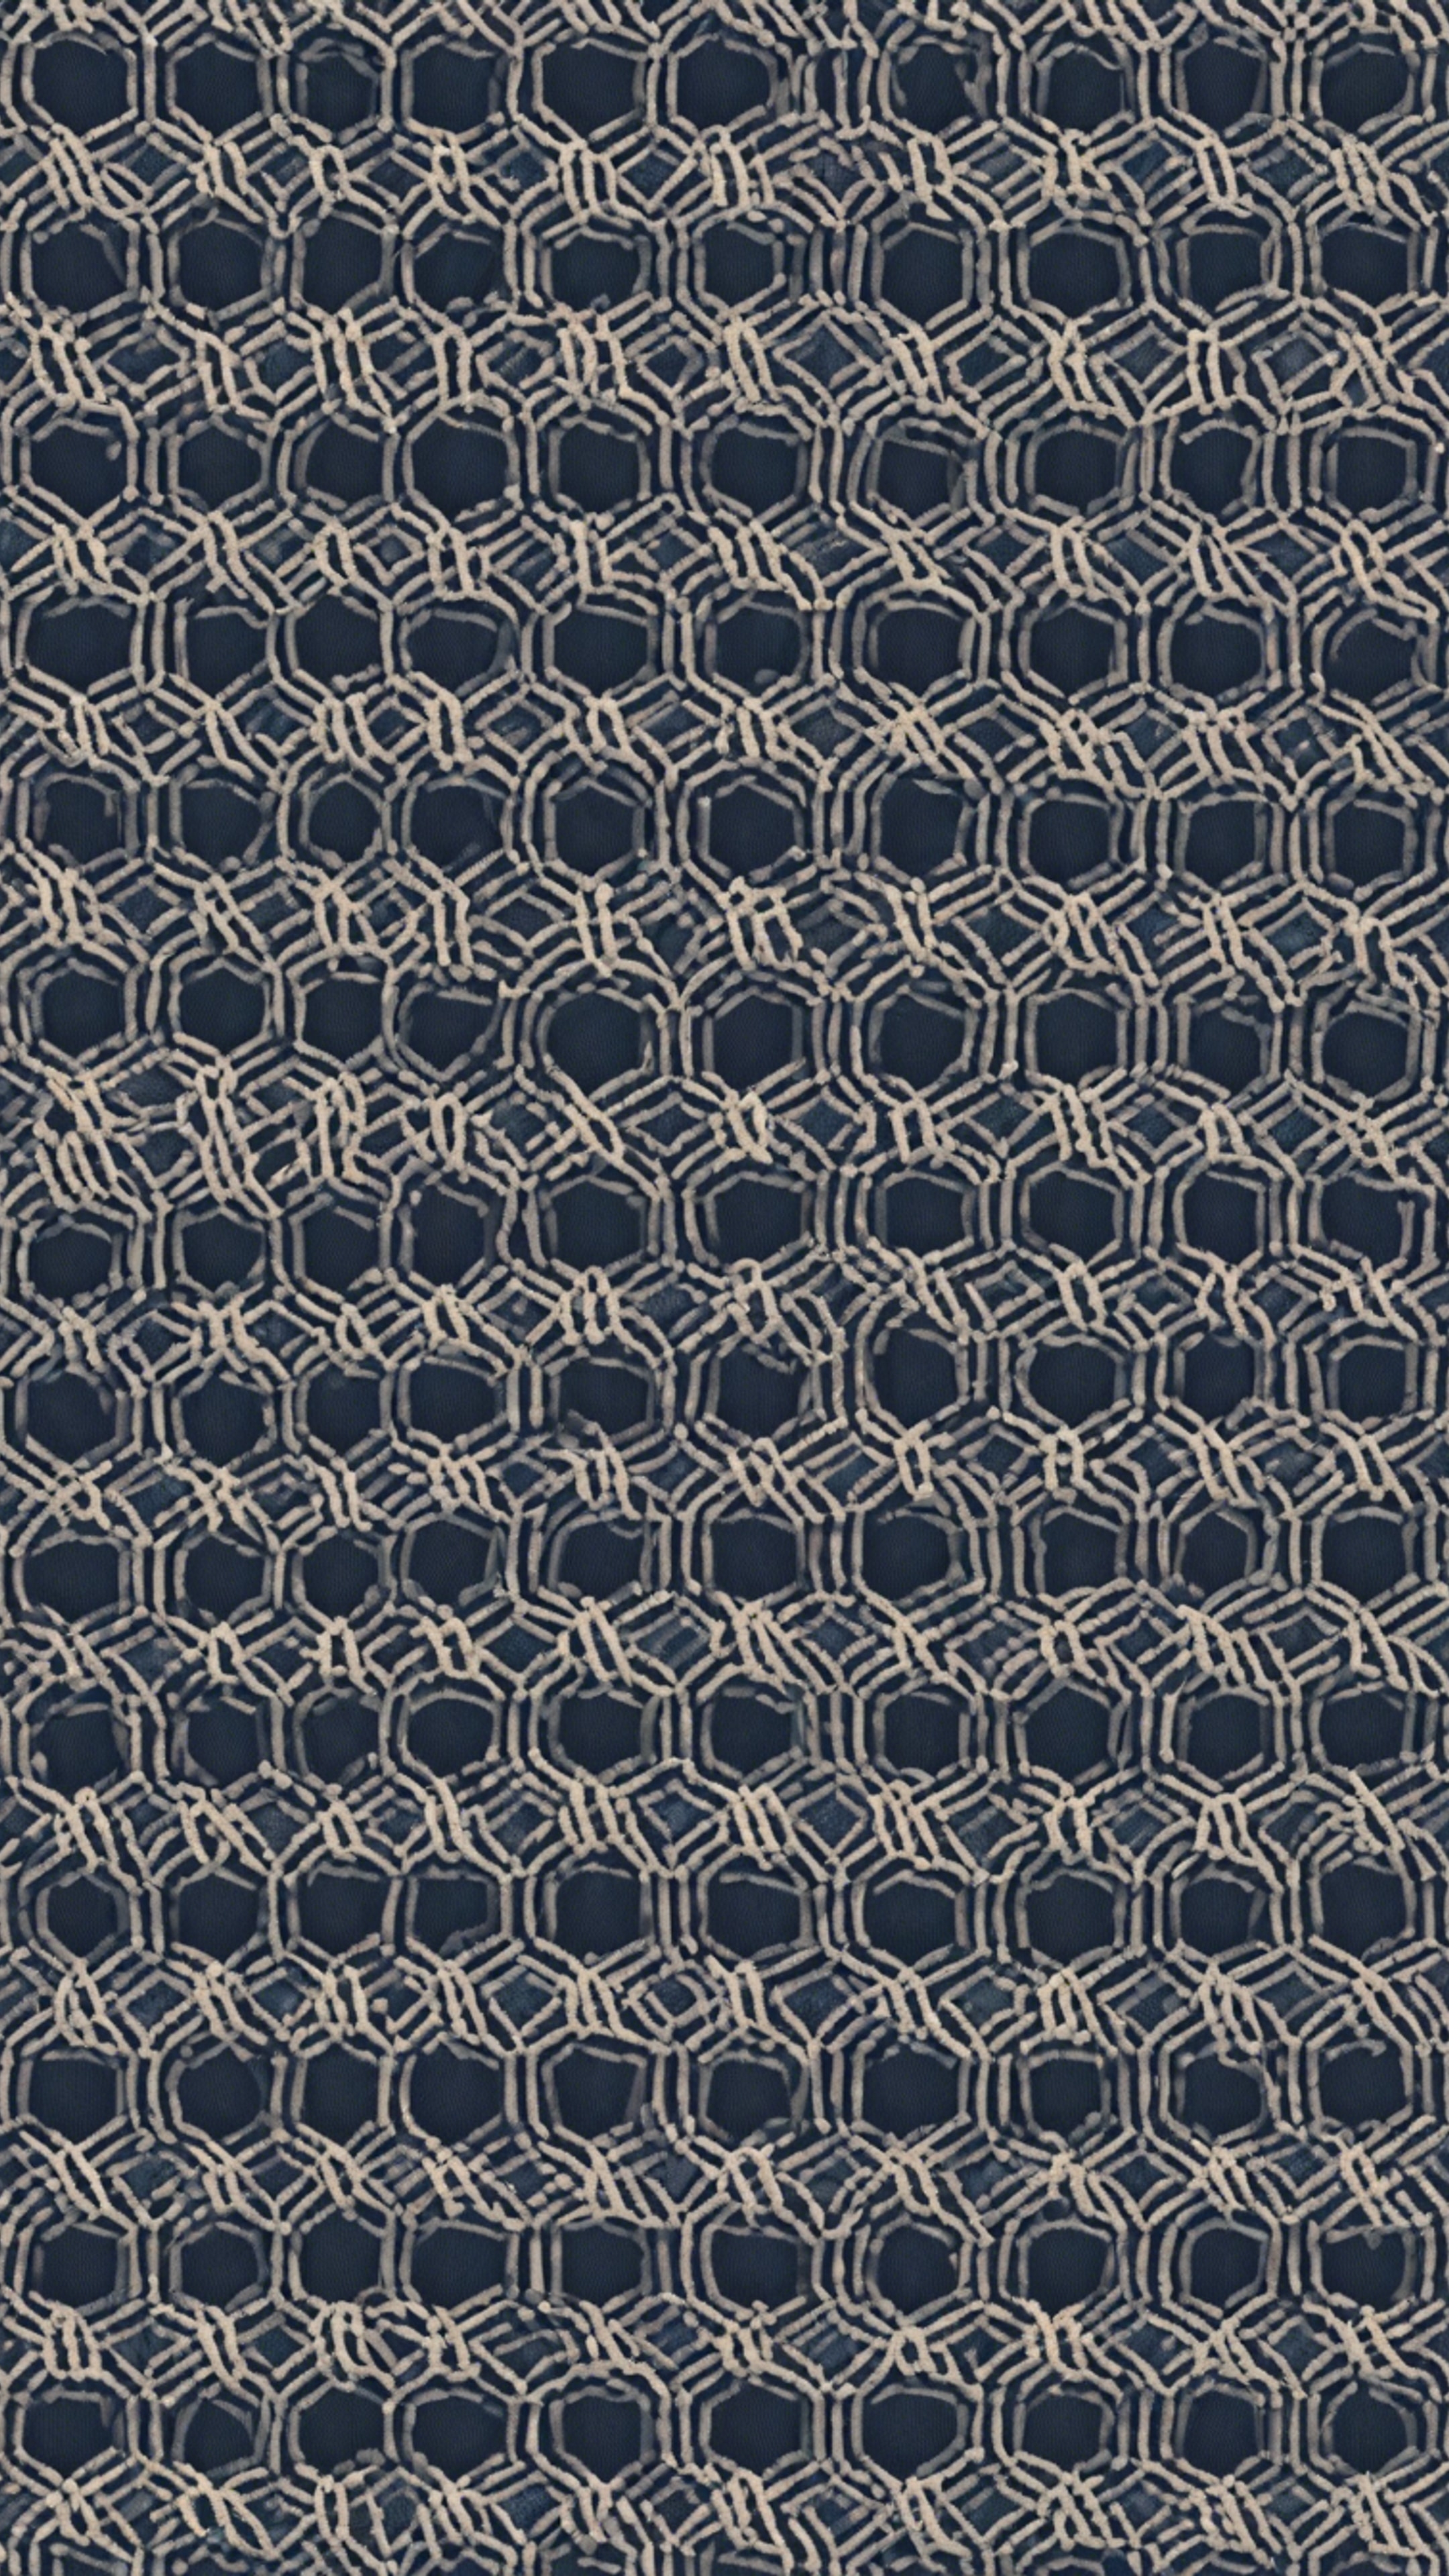 A geometric seamless pattern inspired by traditional Japanese sashiko stitching Fond d'écran[d49f05622a7b4579b9ed]